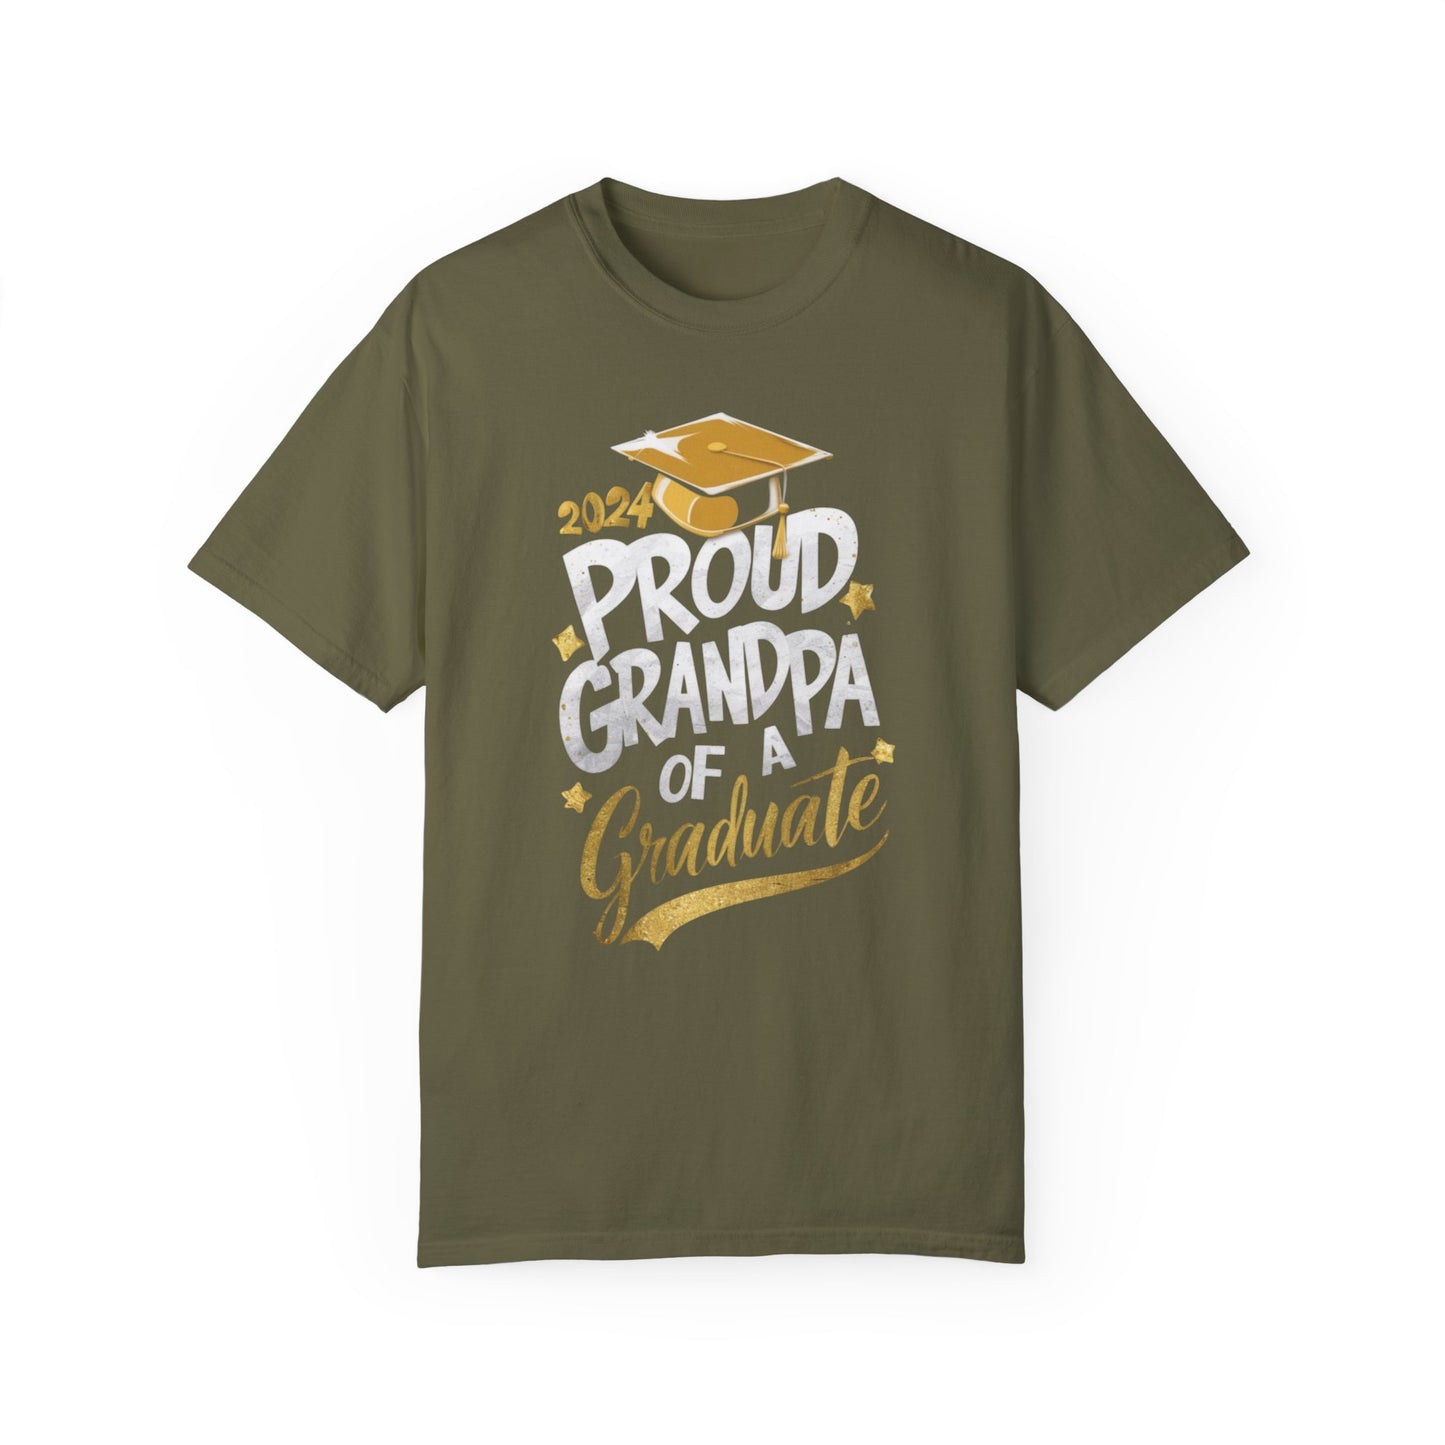 Proud Grandpa of a 2024 Graduate Unisex Garment-dyed T-shirt Cotton Funny Humorous Graphic Soft Premium Unisex Men Women Sage T-shirt Birthday Gift-13